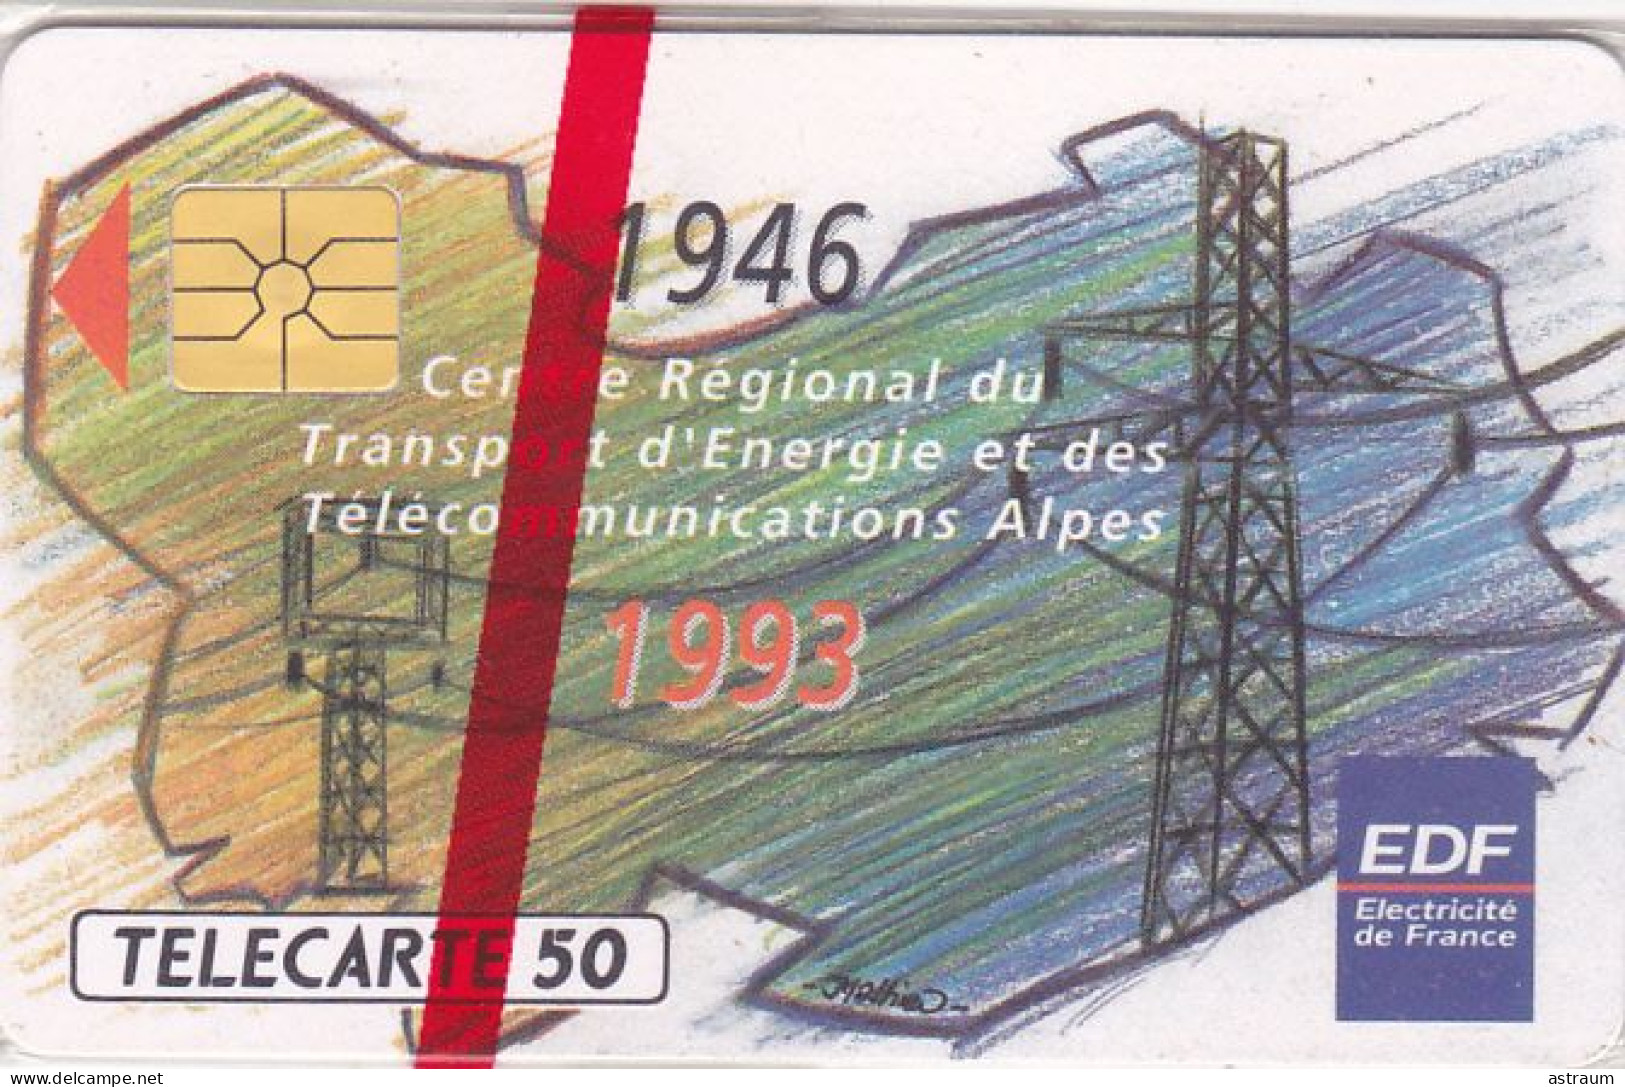 Telecarte Privée / Publique En524 NSB - Crtt Alpes - 50 U - Gem - 1992 - 50 Units